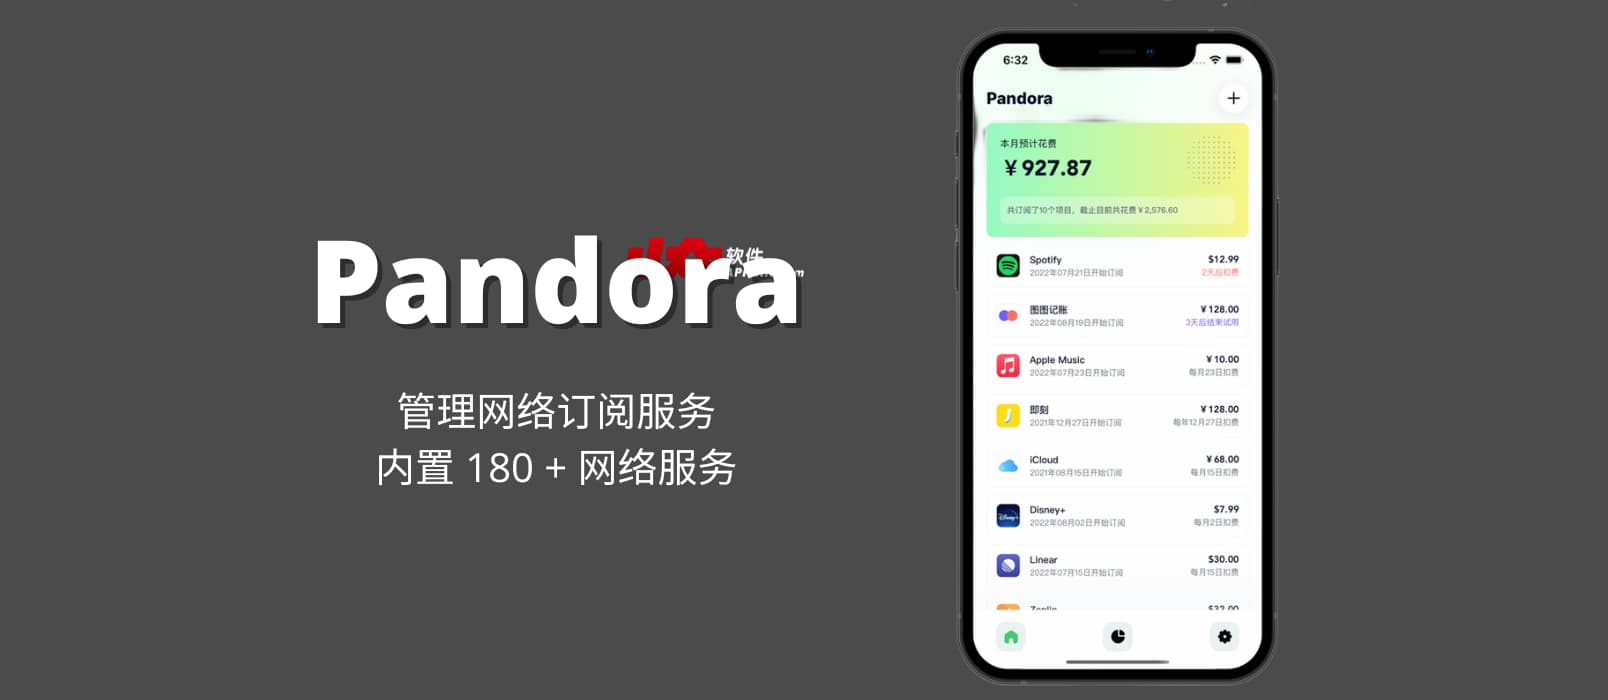 Pandora – 管理网络付费订阅，内置 180 + 网络订阅服务[iPhone/iPad]